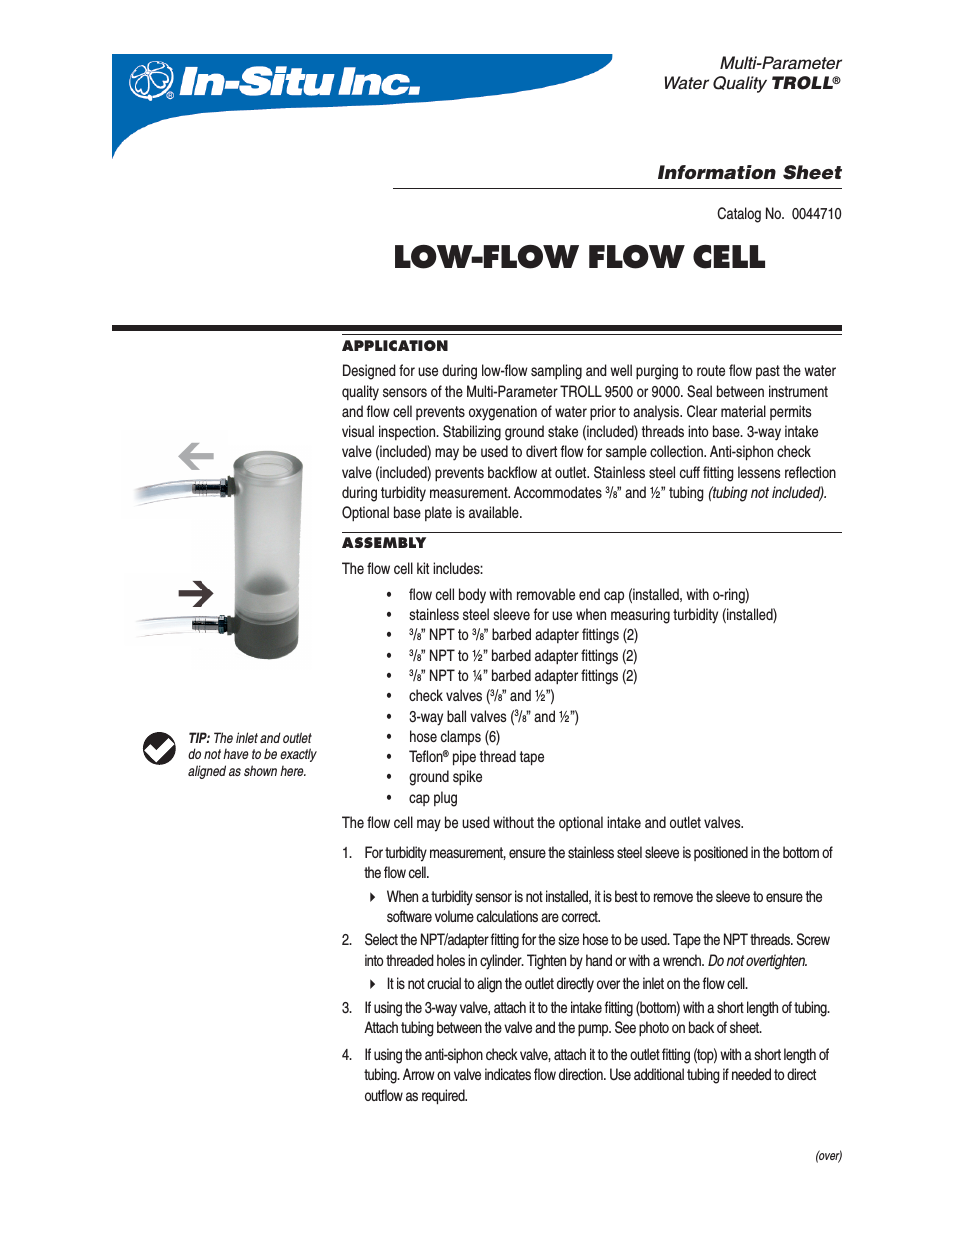 Flow Cell for Low-Flow Measurements (2-in diameter sonde)